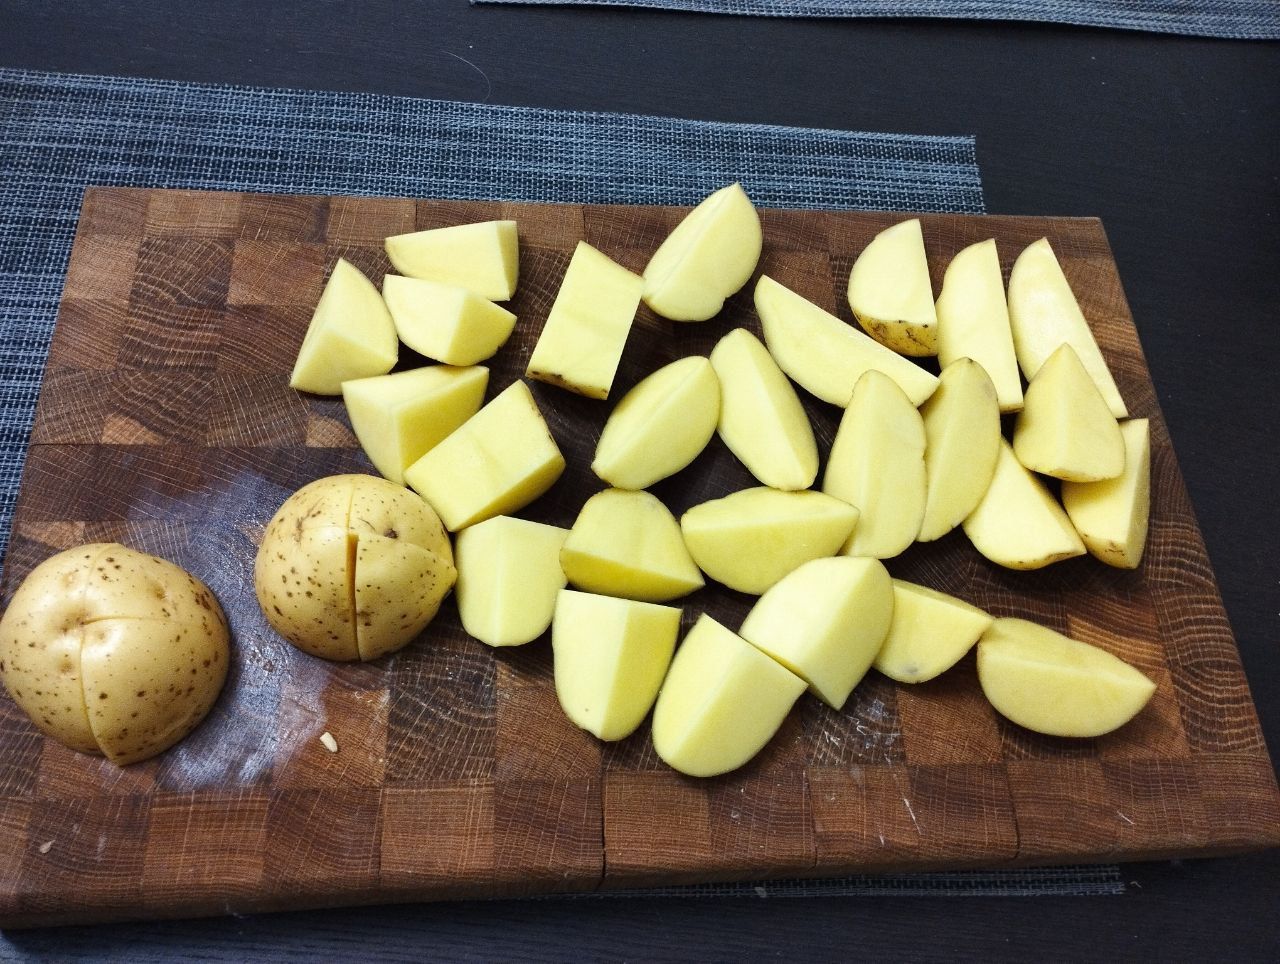 Тут как раз видно оба варианта нарезки: и мелкой, и более крупной картошки.